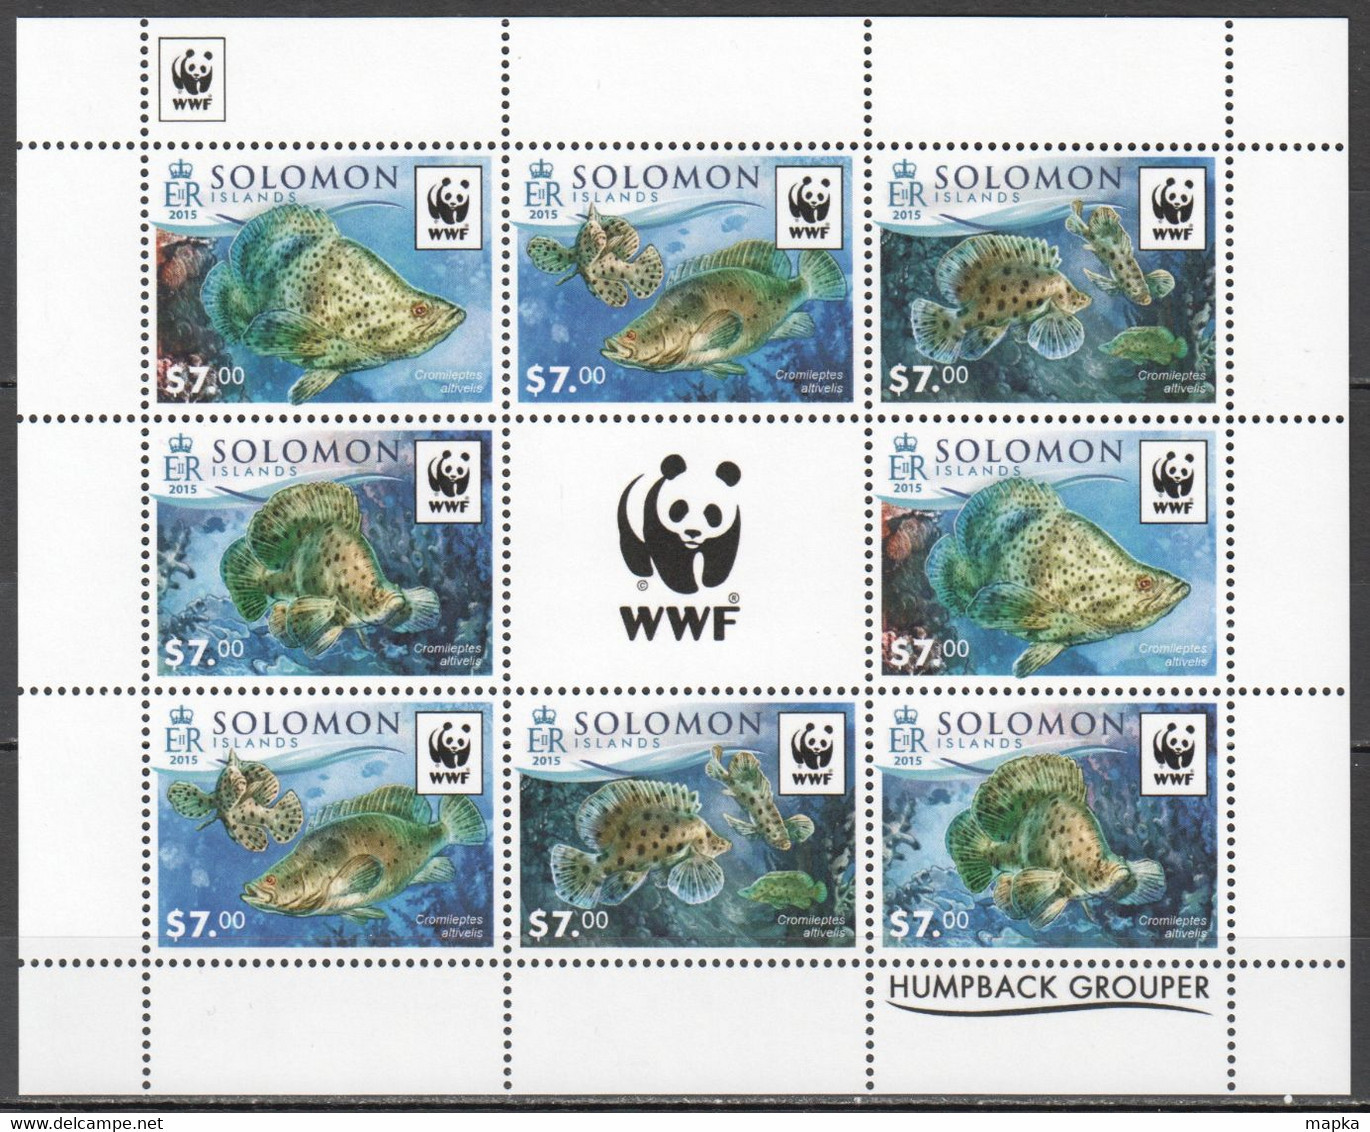 LS837 2015 SOLOMON ISLANDS WWF MARINE LIFE HUMPBACK GROUPER MICHEL #3416-19 1KB MNH - Nuovi